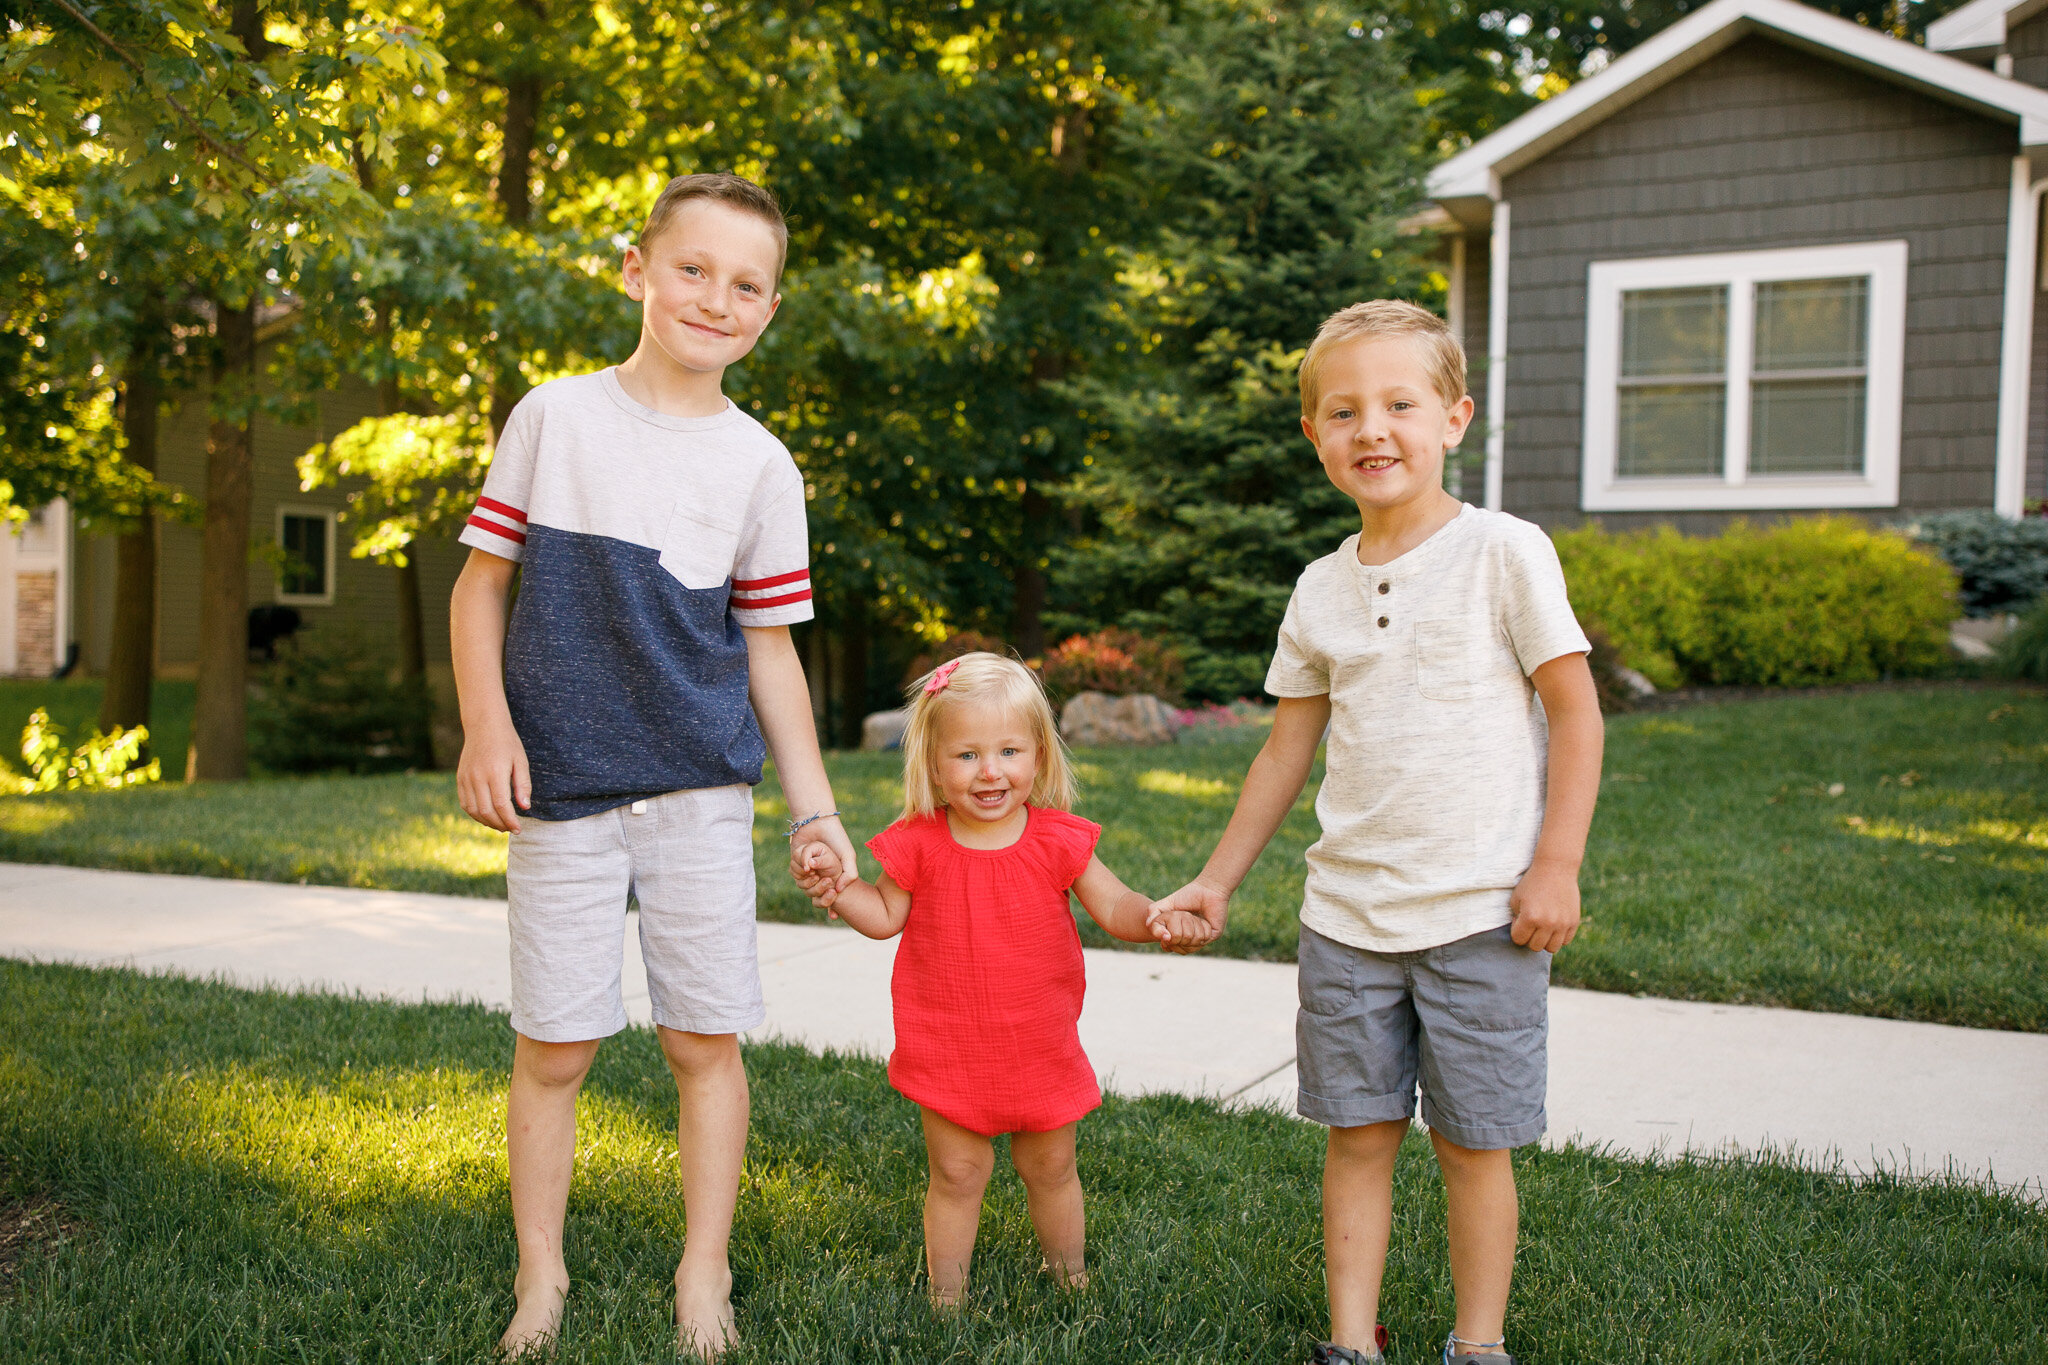 Clabuesch Family - Grand Rapids Family Photographer - Grand Rapids Lifestyle Photographer - Jessica Darling - J Darling Photo031.jpg